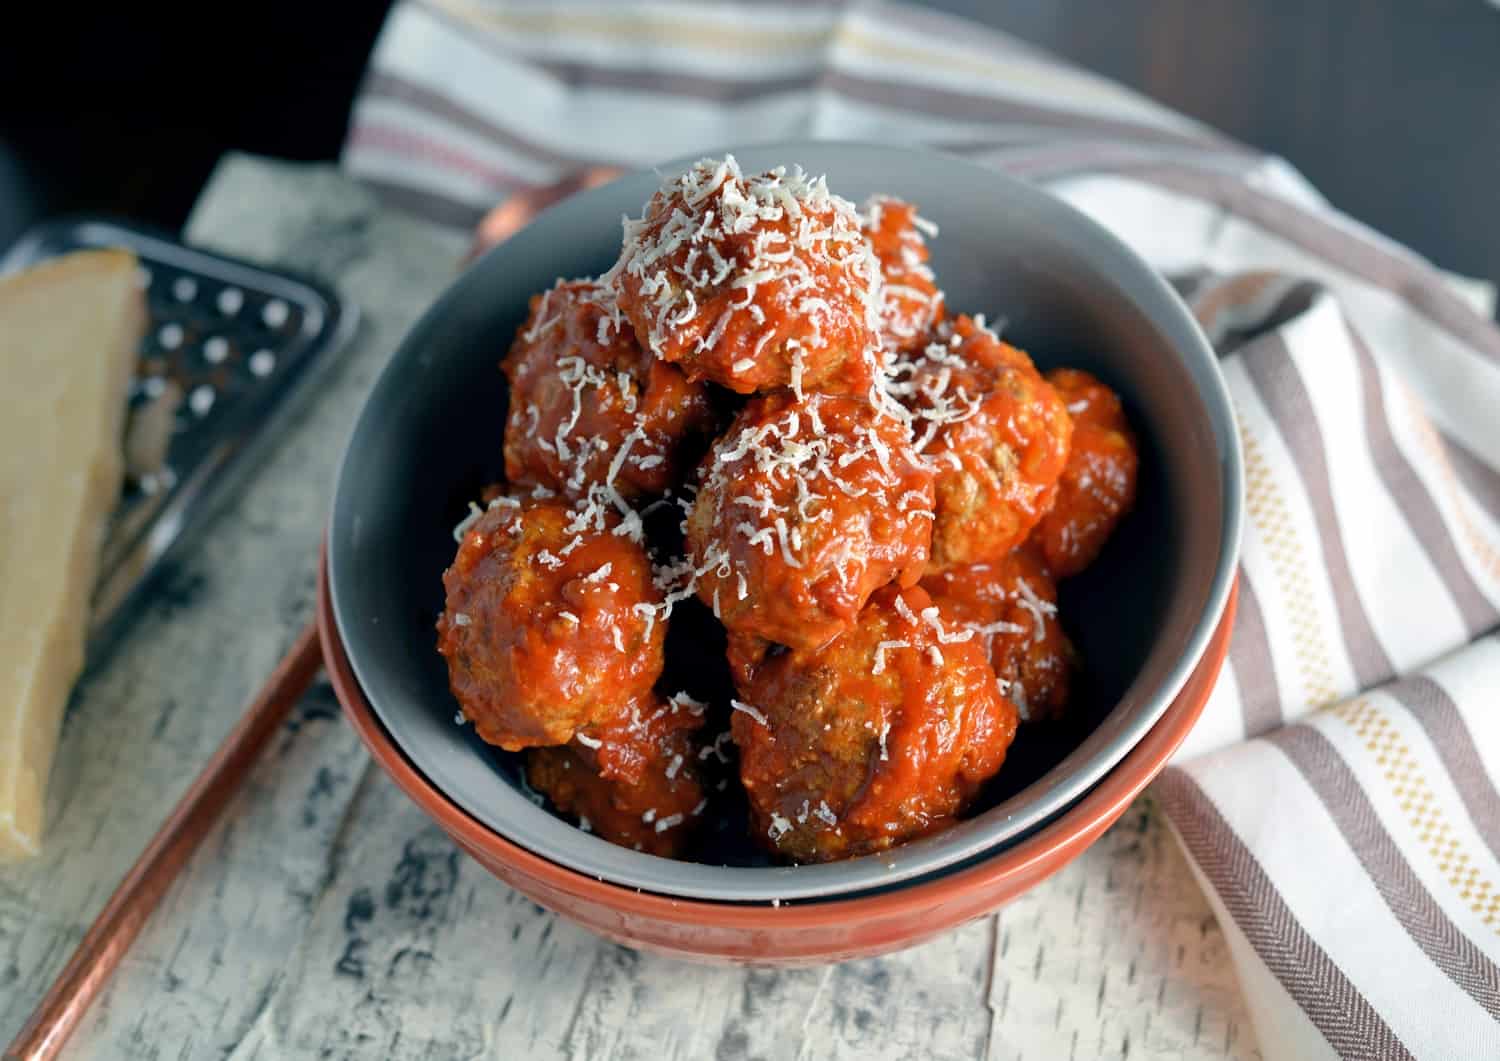 Italian meatballs in a gray bowl